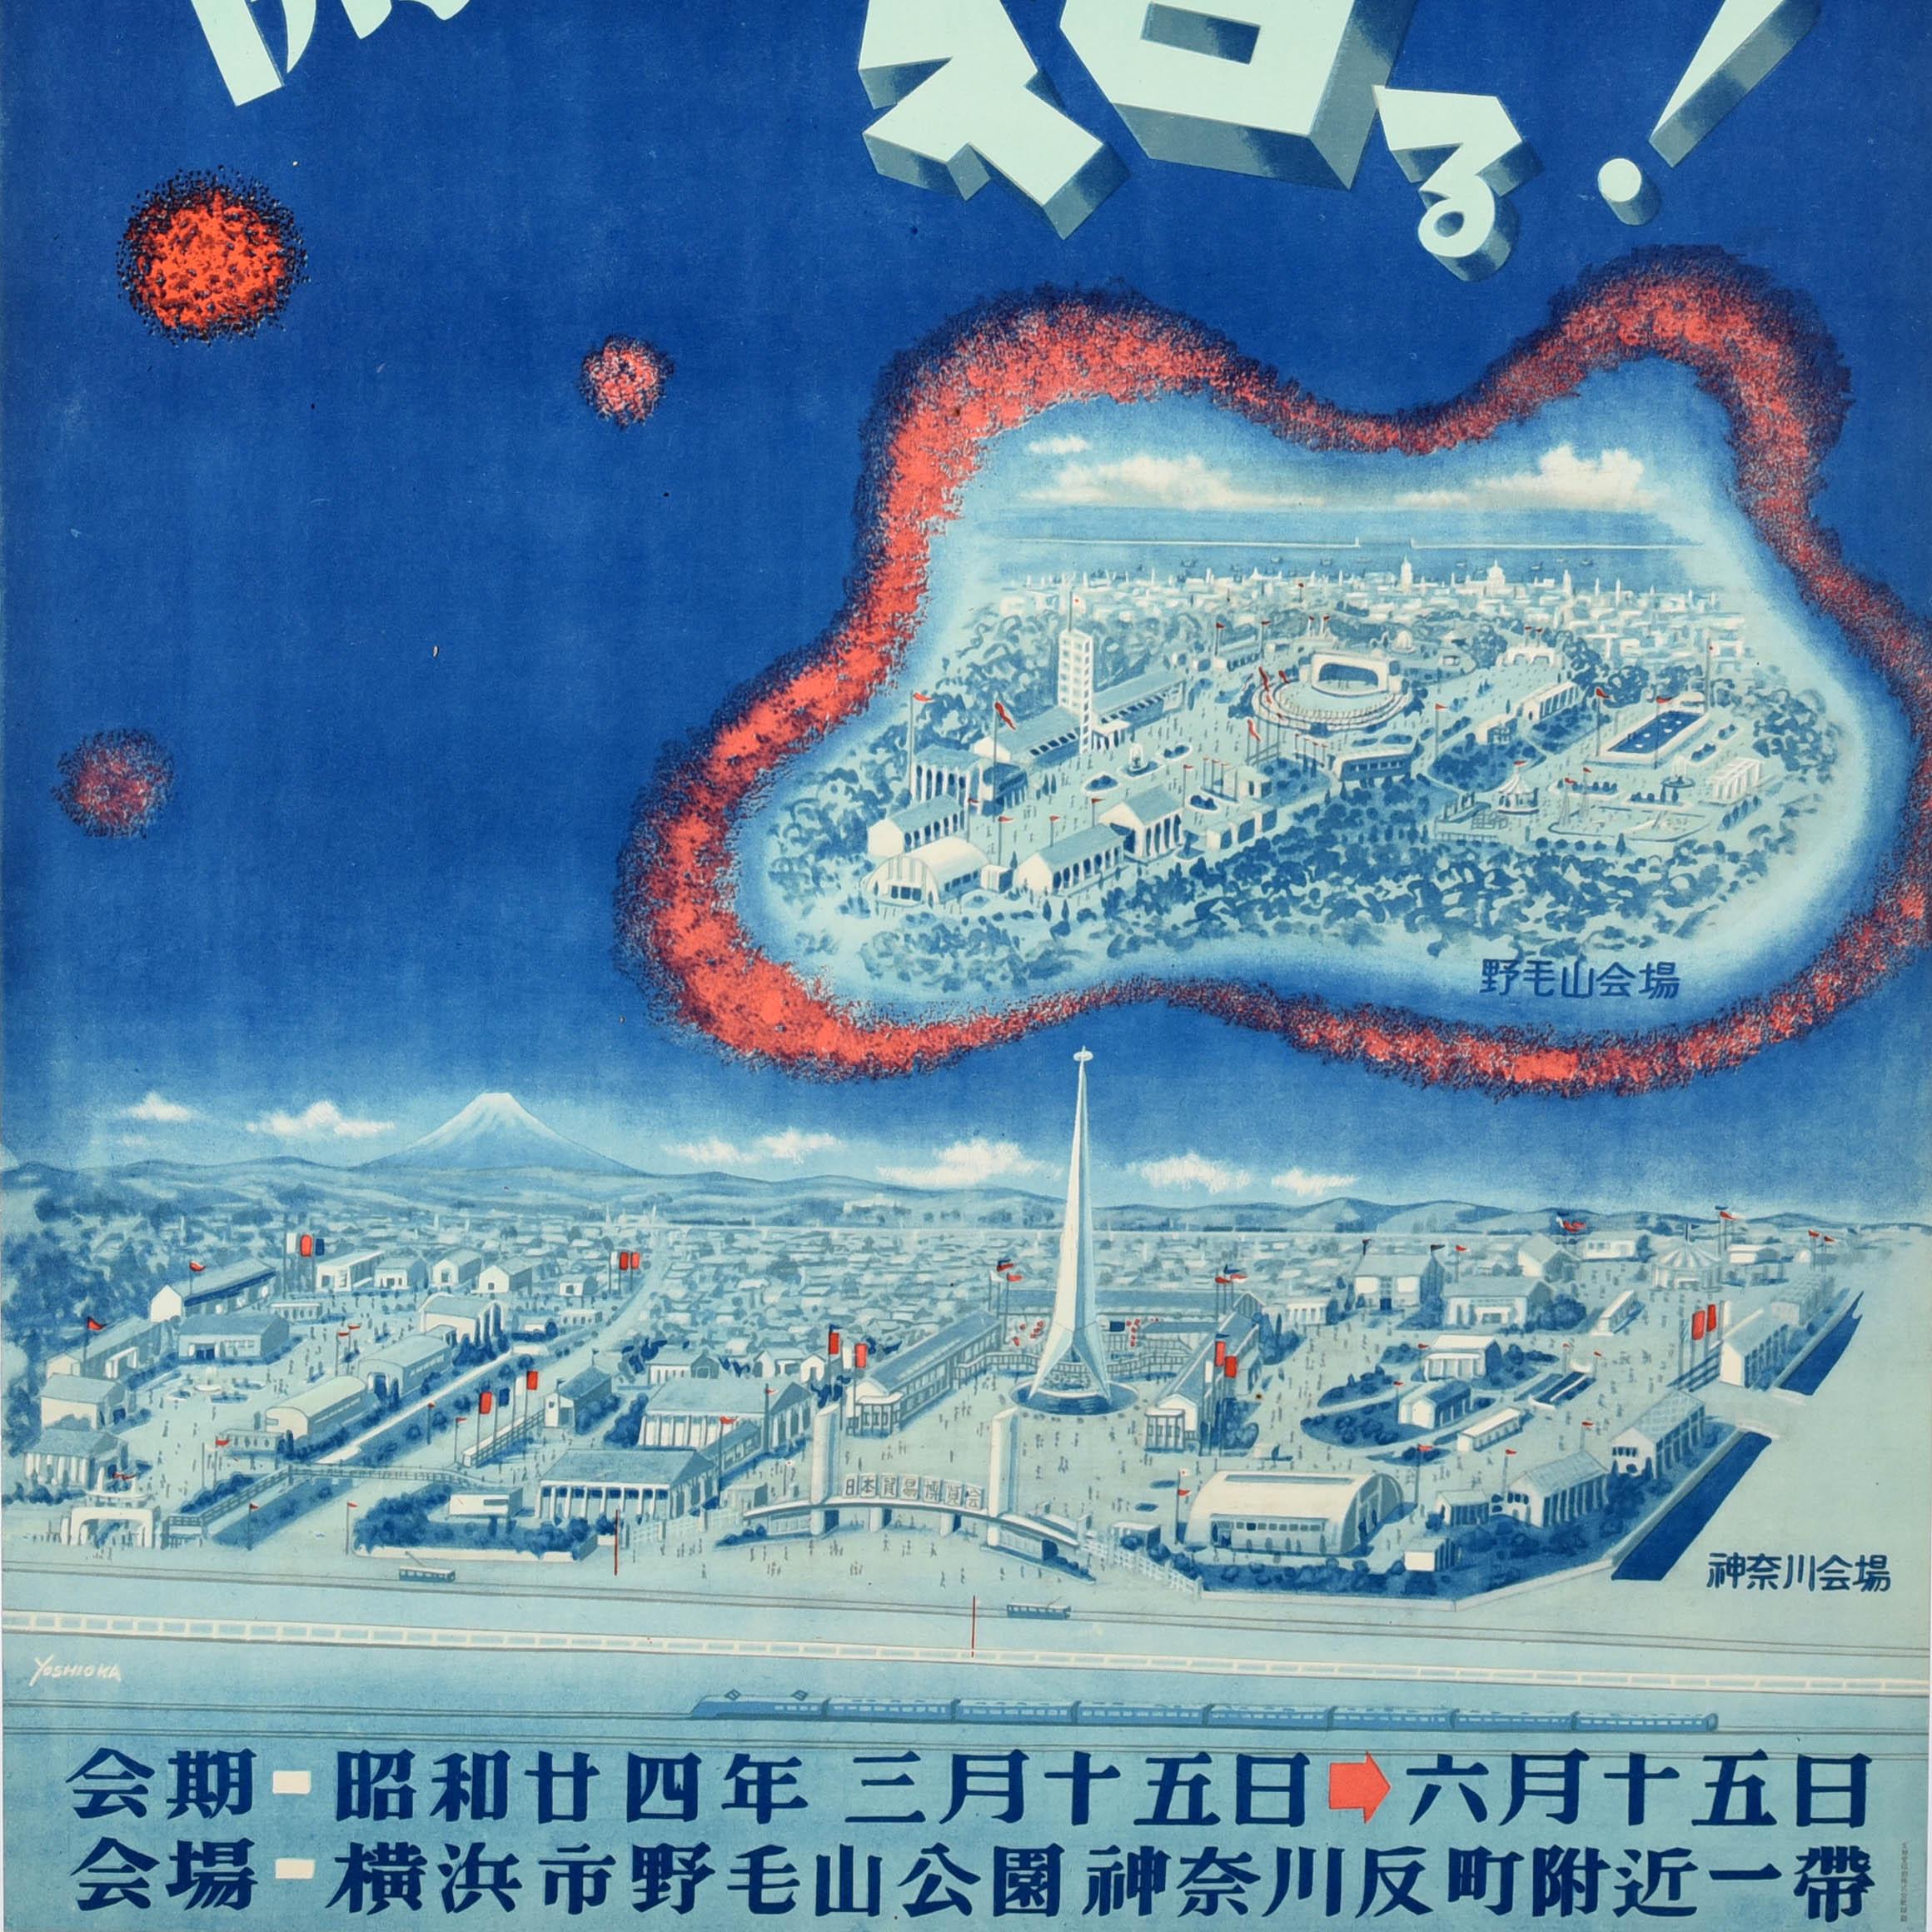 japanese advertising poster